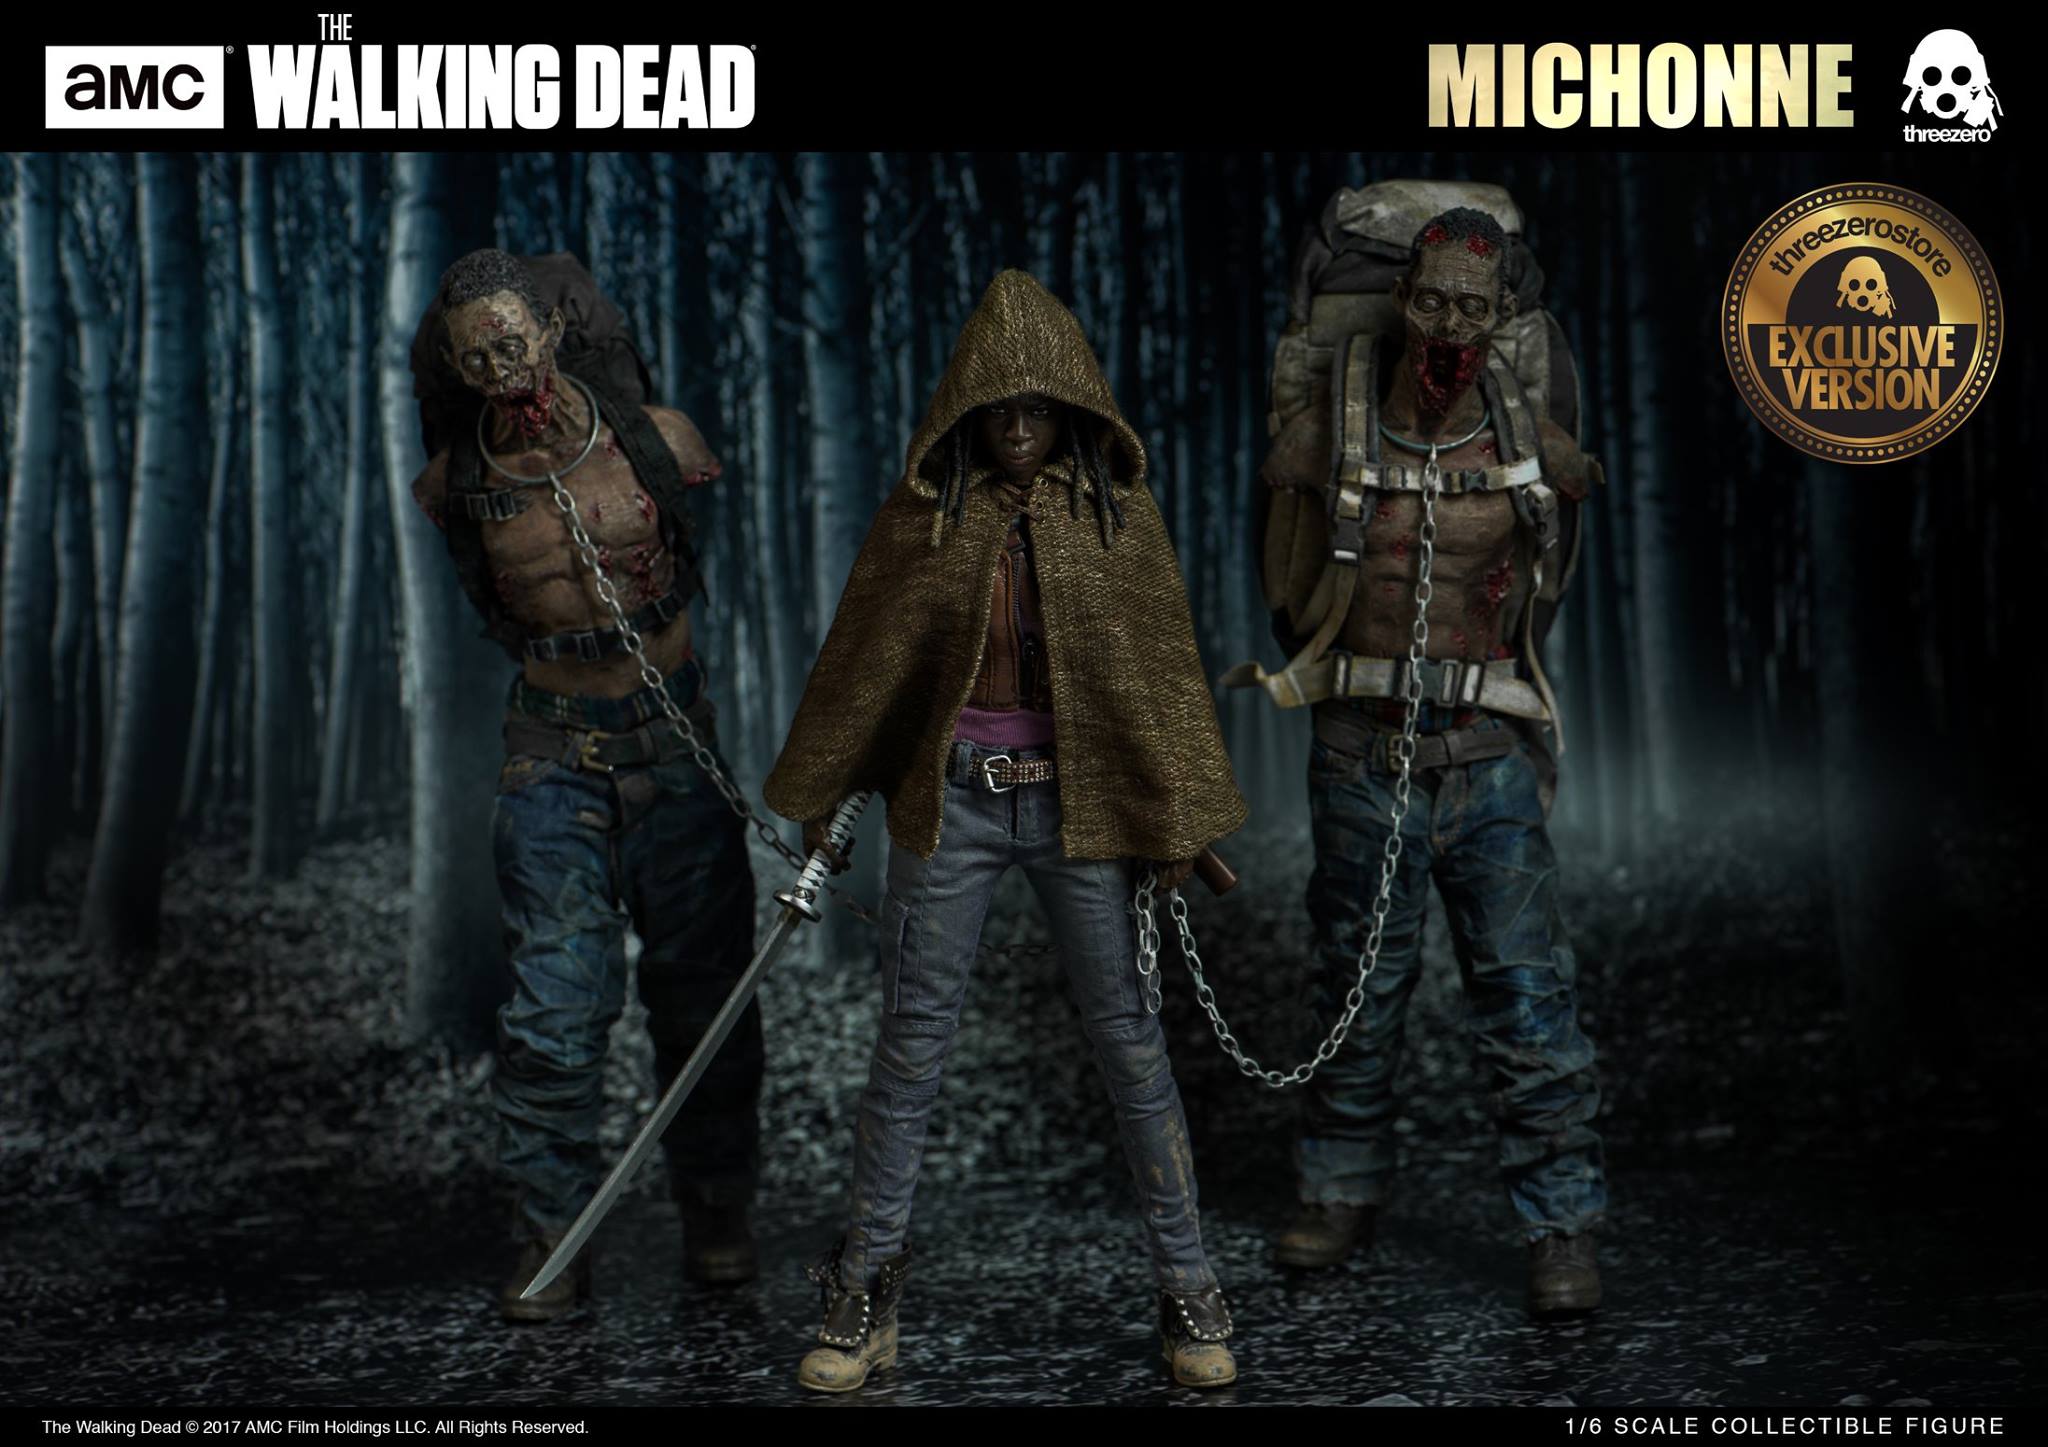 The Walking Dead Season, Episode and Cast Information - AMC